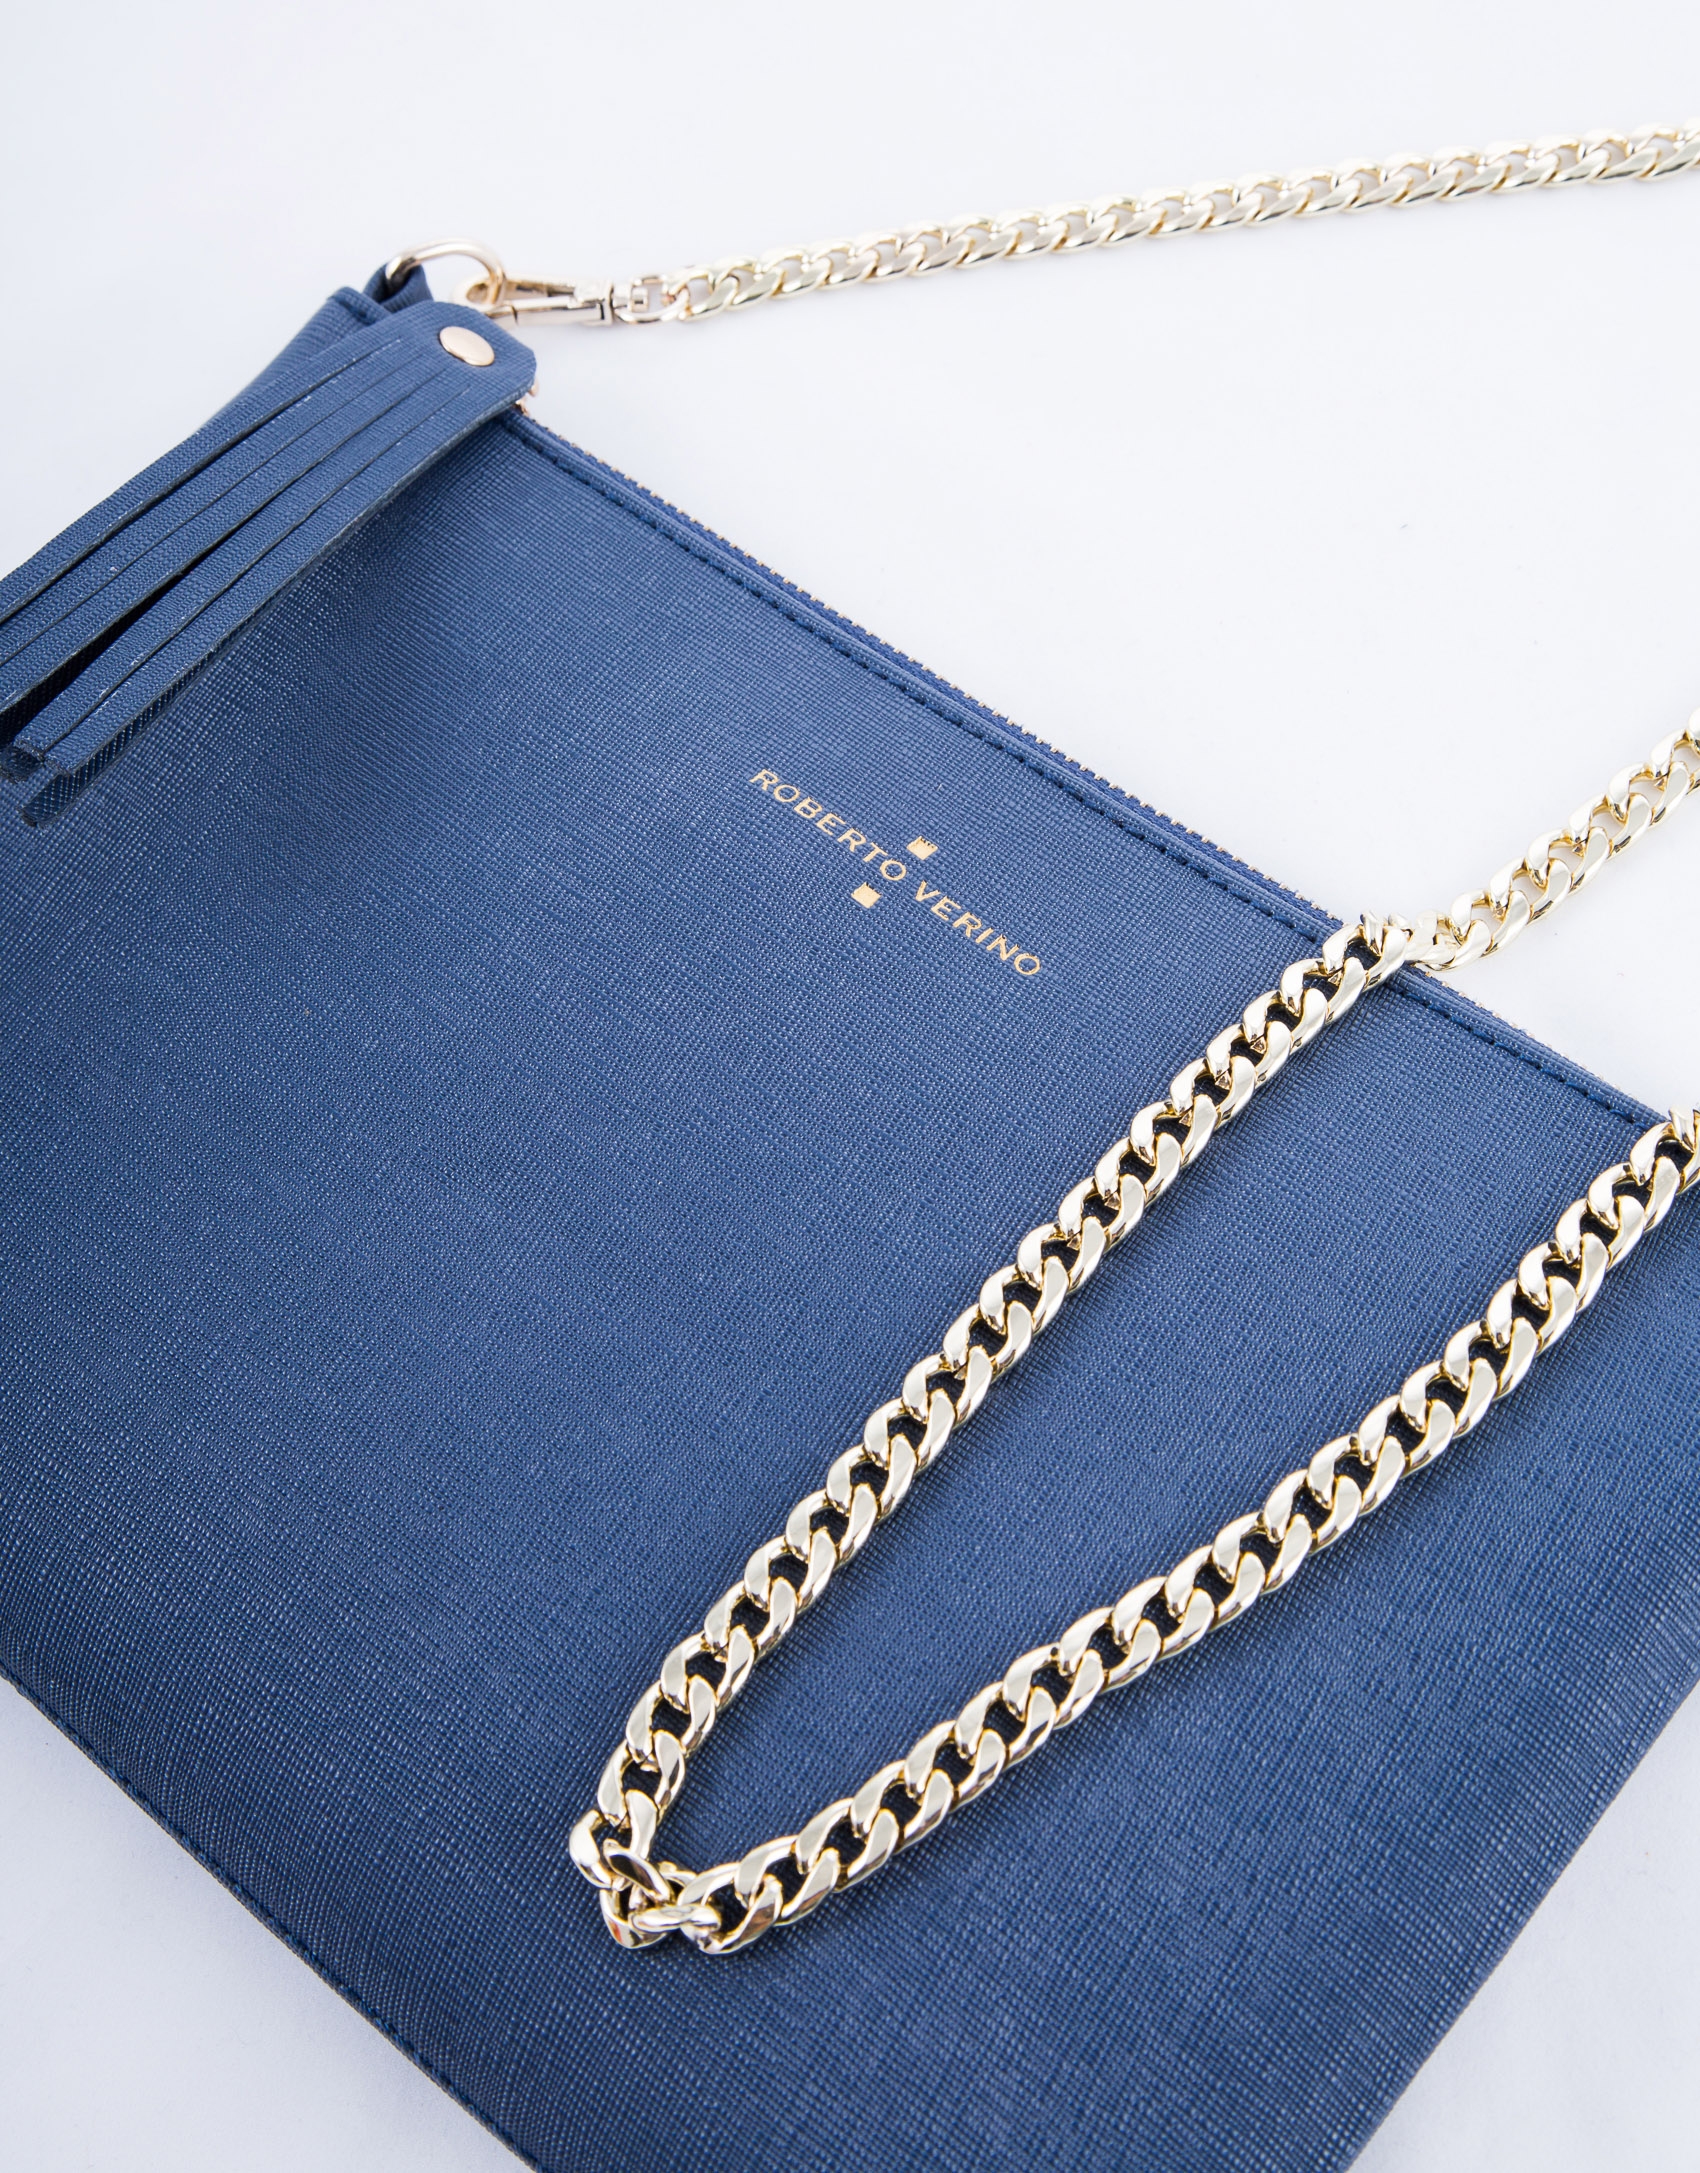 Navy blue leather Lisa clutch bag